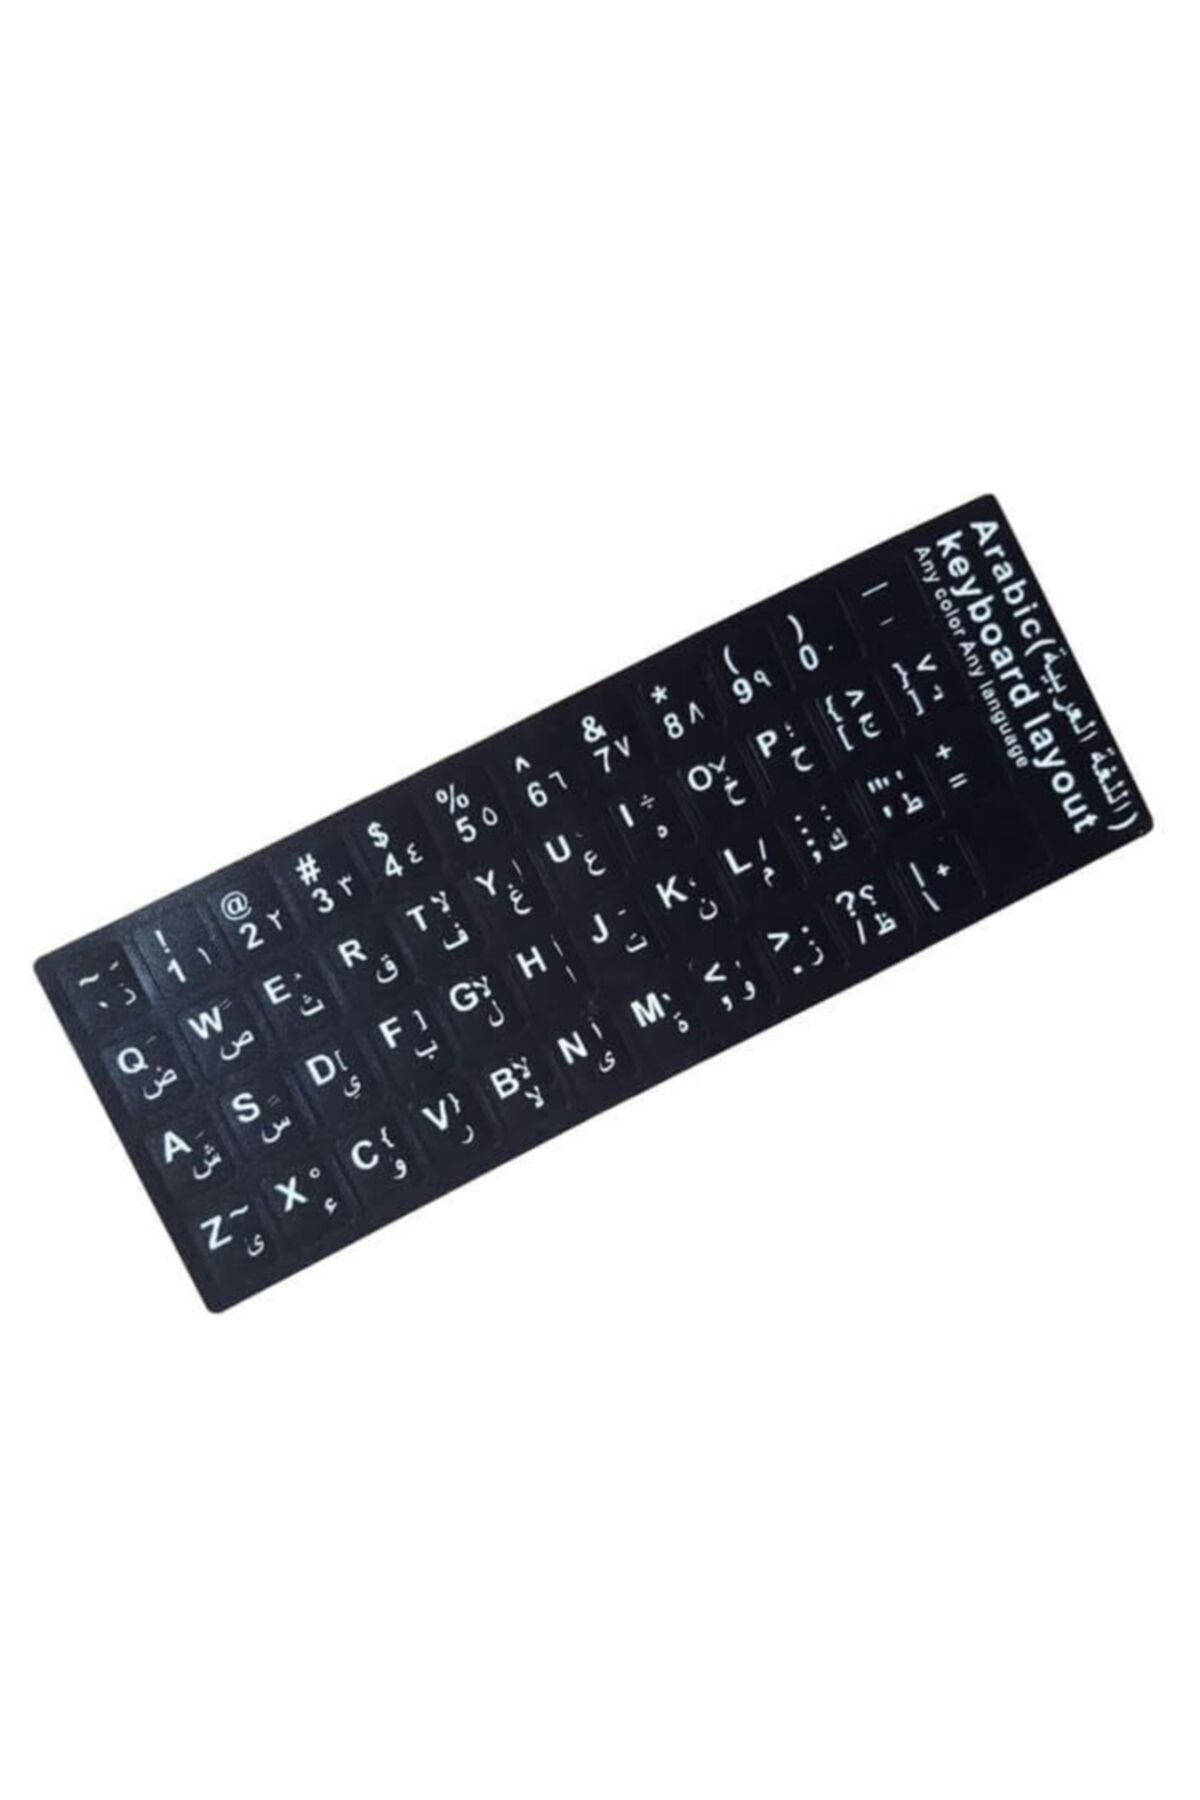 WOZLO Arapça Notebook Klavye Sticker Etiketi Siyah